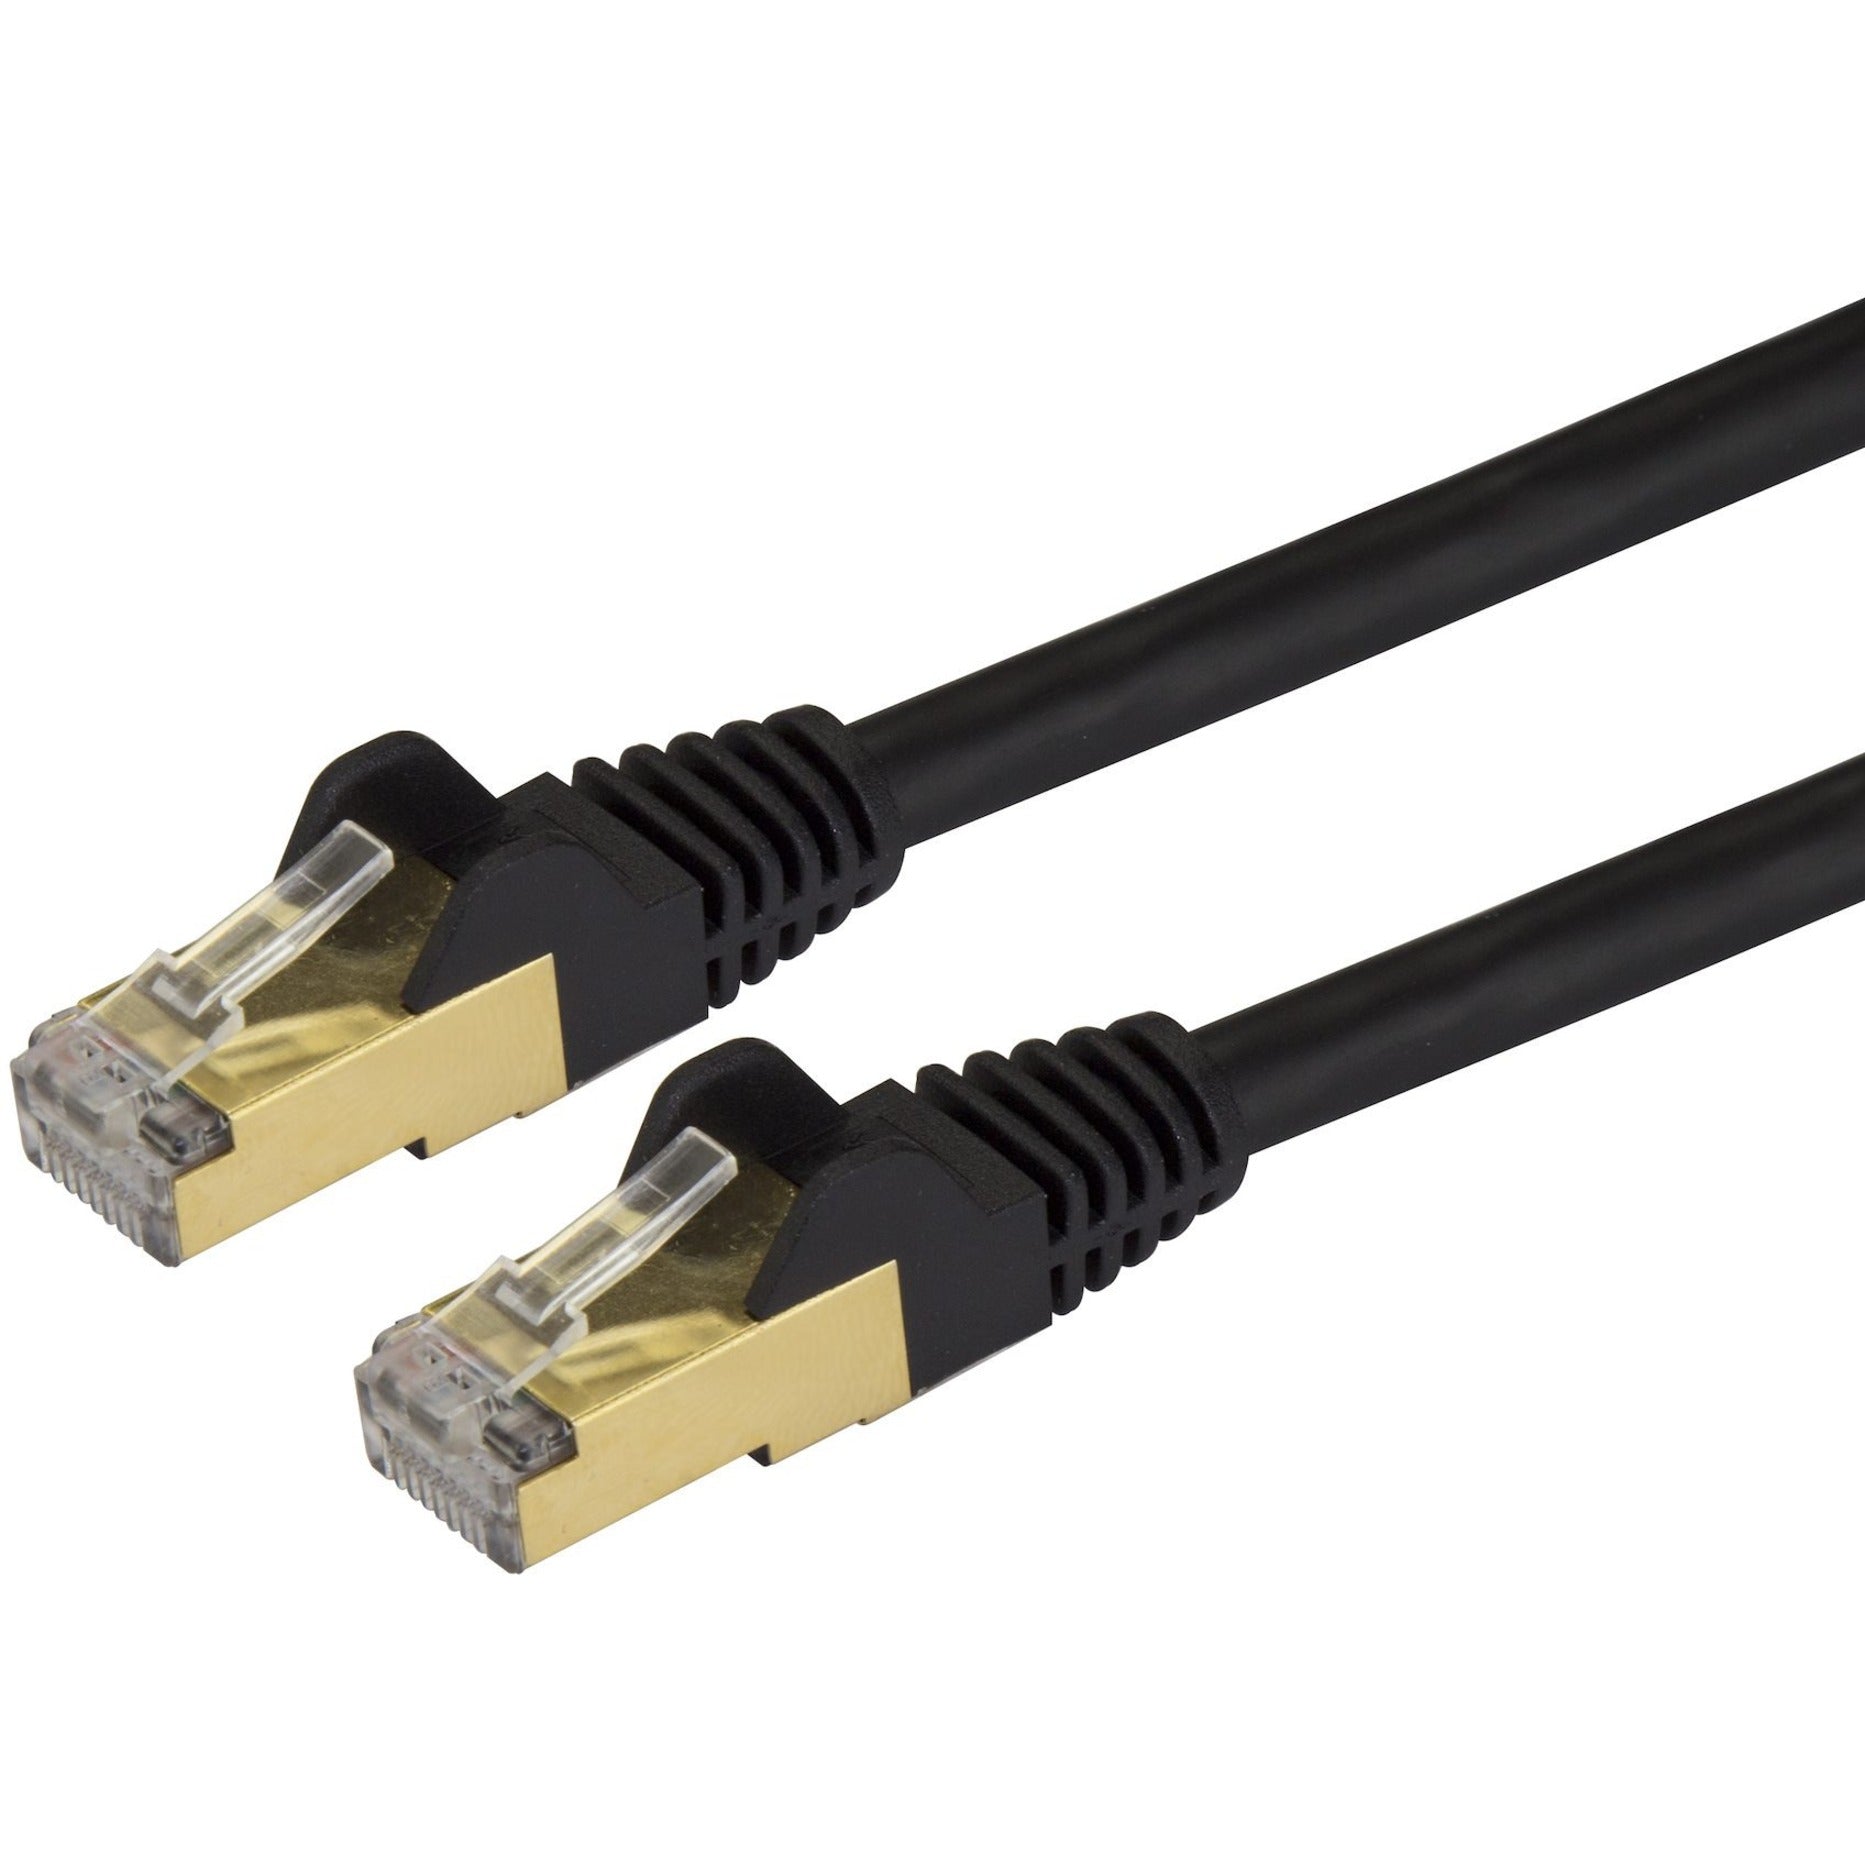 StarTech.com C6ASPAT9BK Cat6a Ethernet Patch Cable - Shielded (STP) - 9 ft., Black, Snagless RJ45 Ethernet Cord